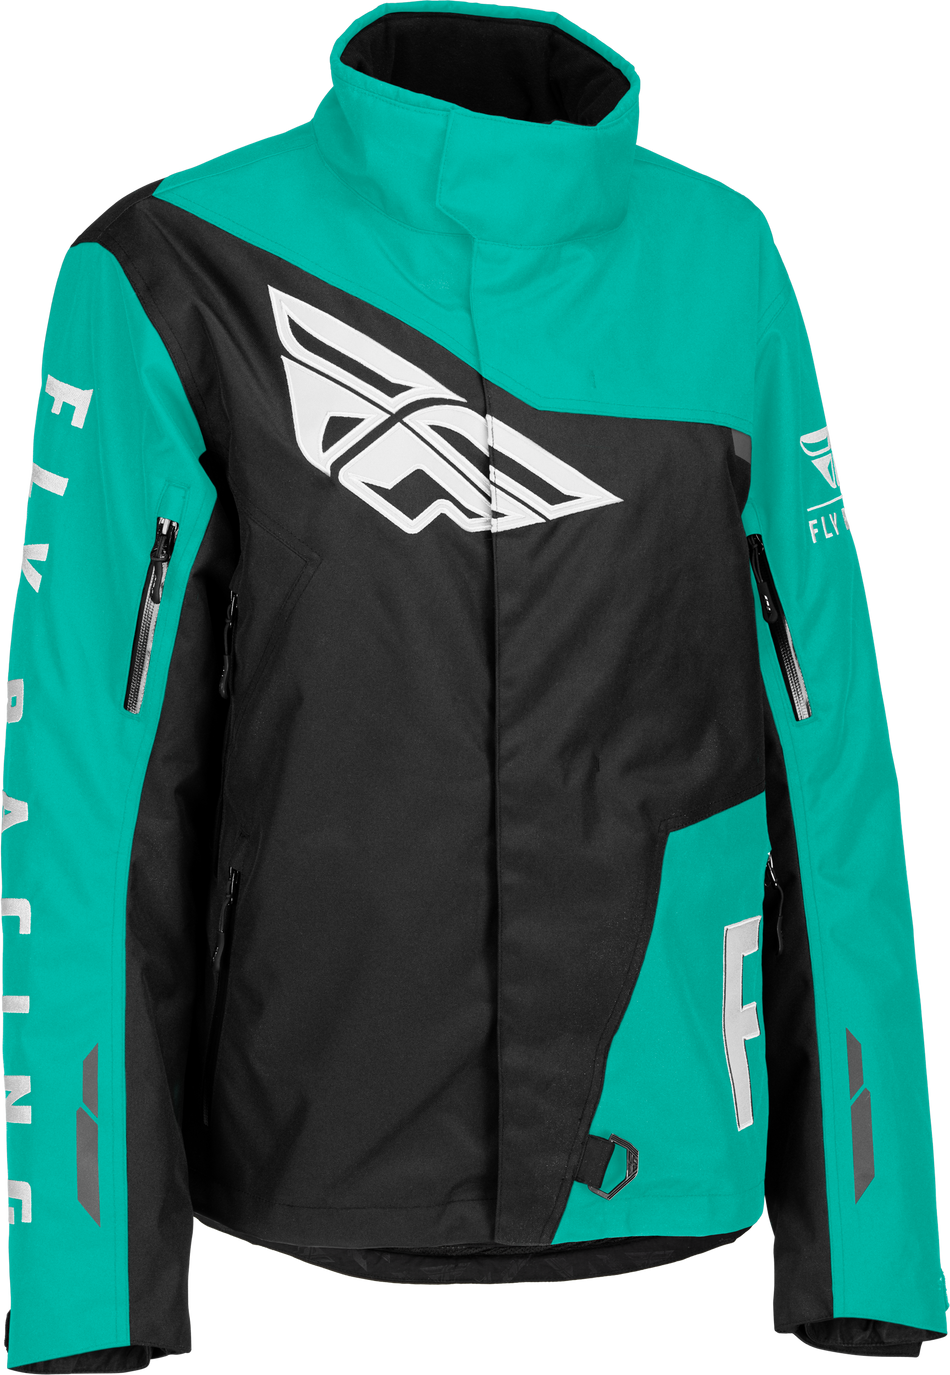 FLY RACING Women's Snx Pro Jacket Black/Mint Md 470-4510M